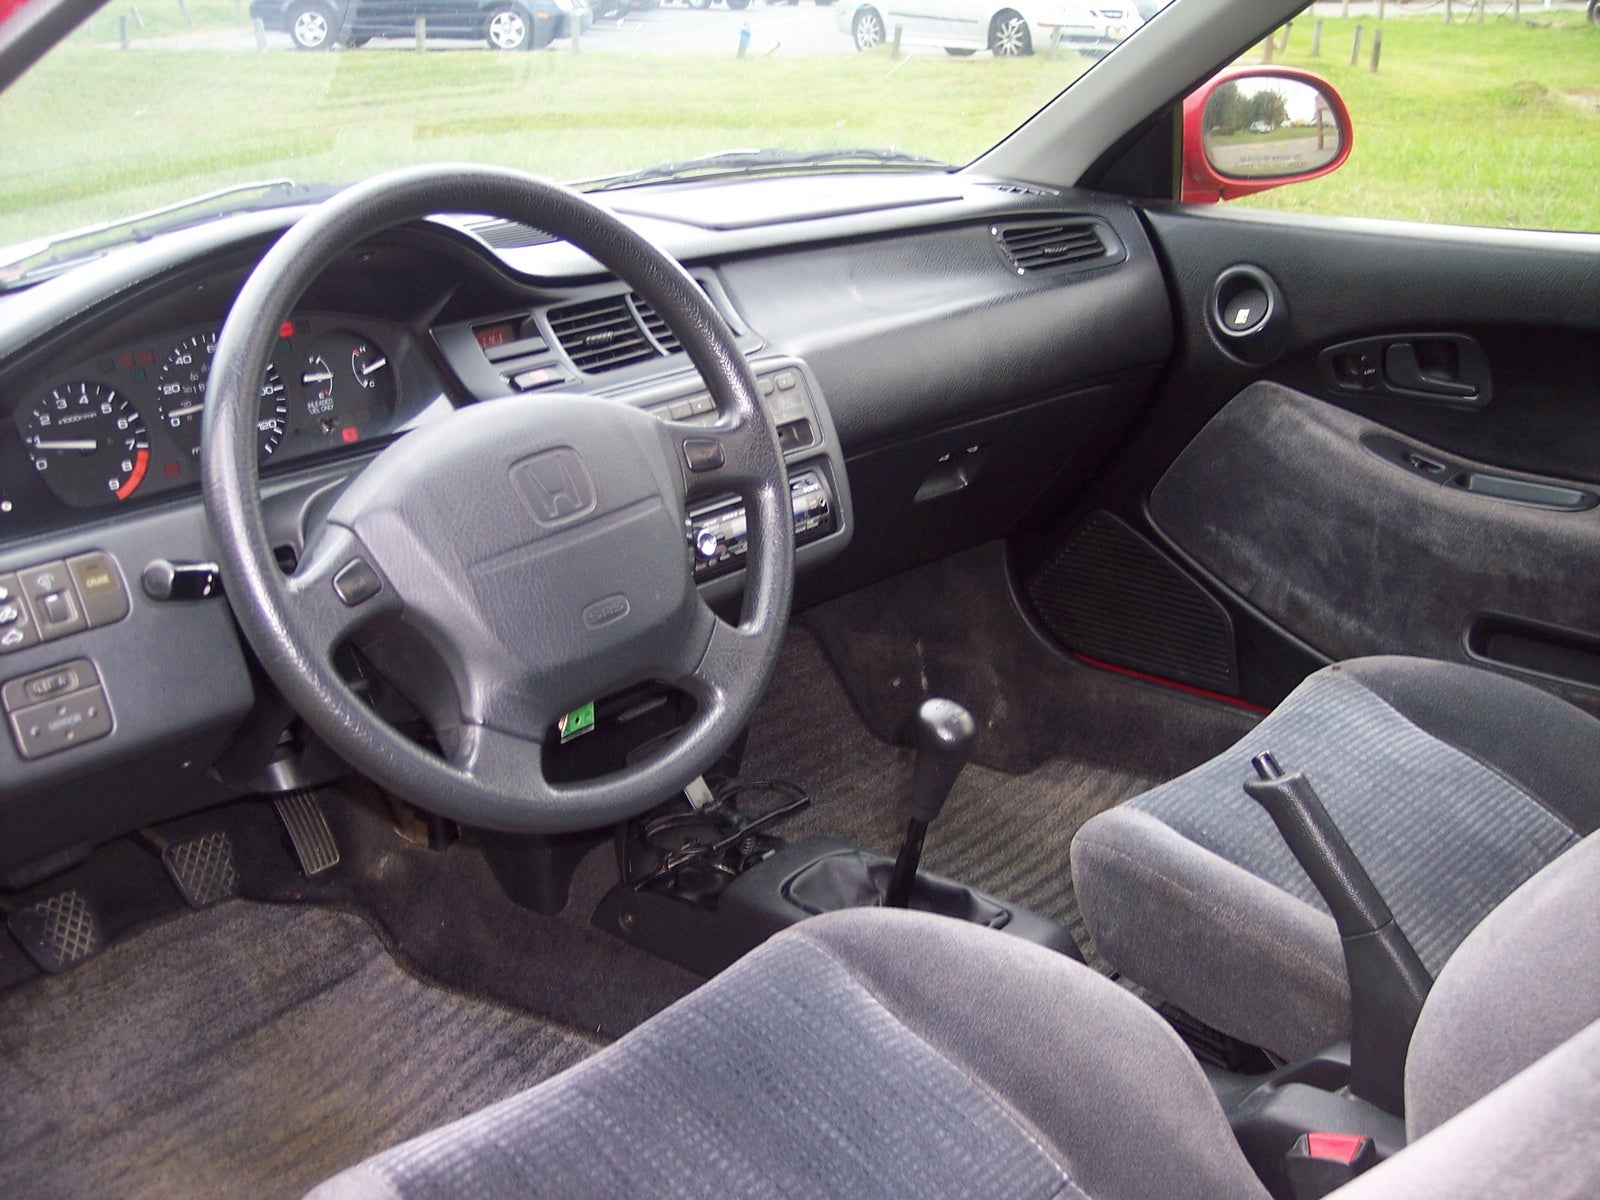 Honda civic 1995 interior